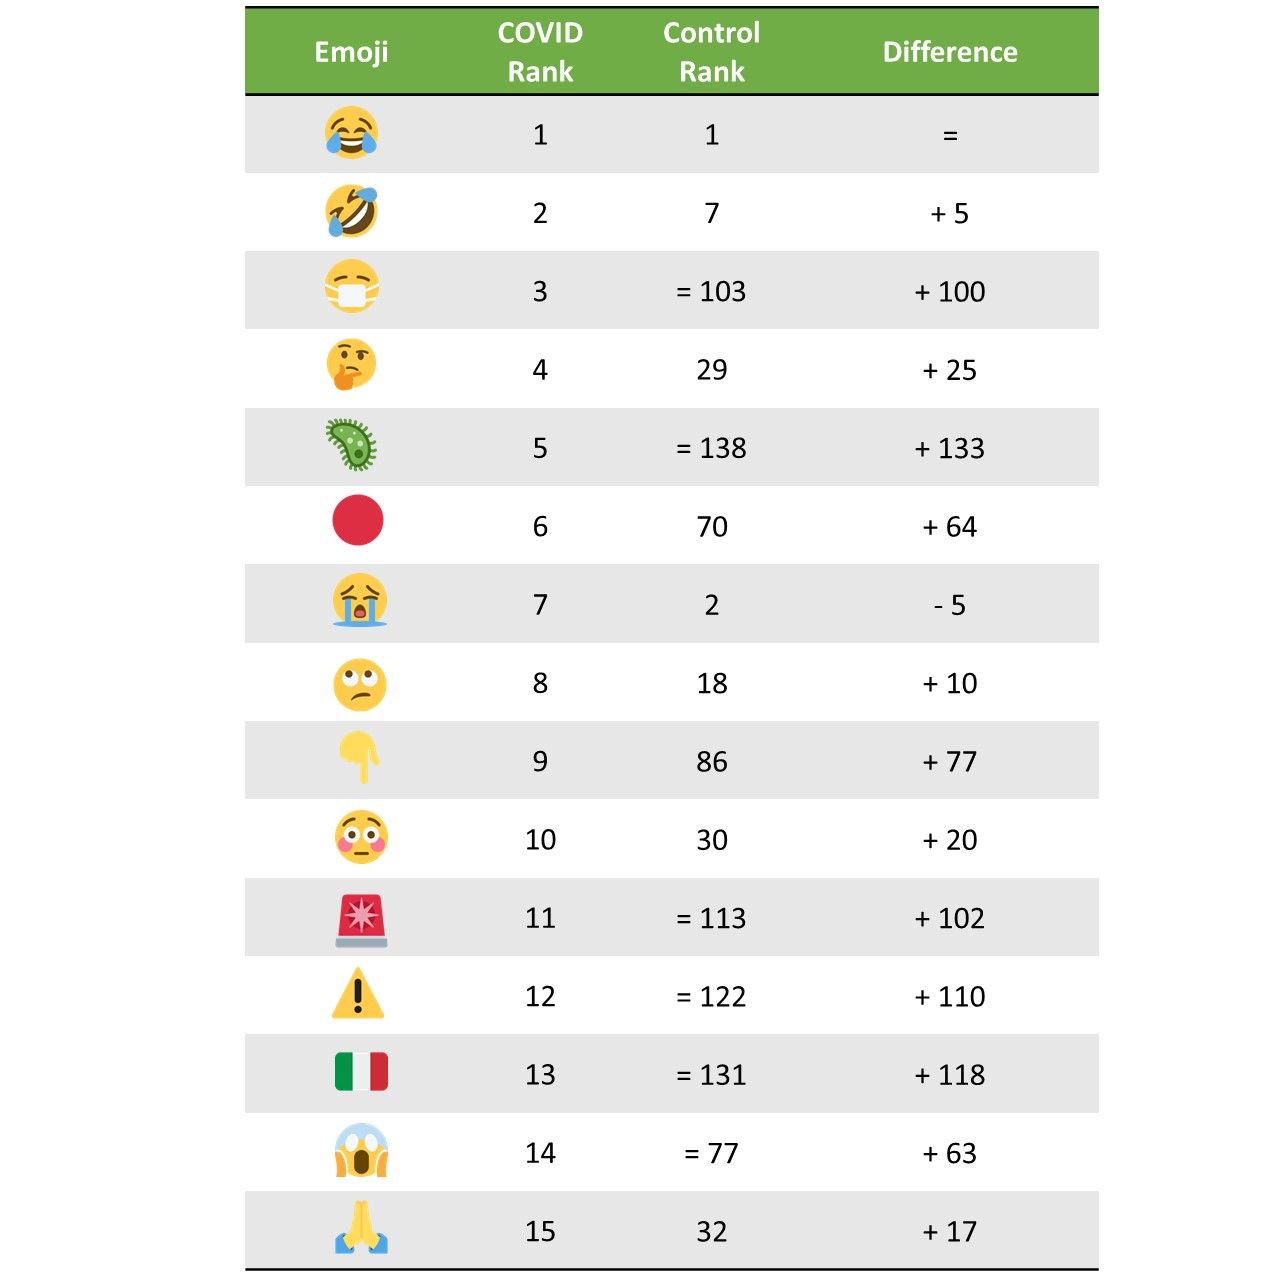 Emojipedia-Coronavirus-Most-Popular-15-Emojis-Comparison-With-General-Sample-1